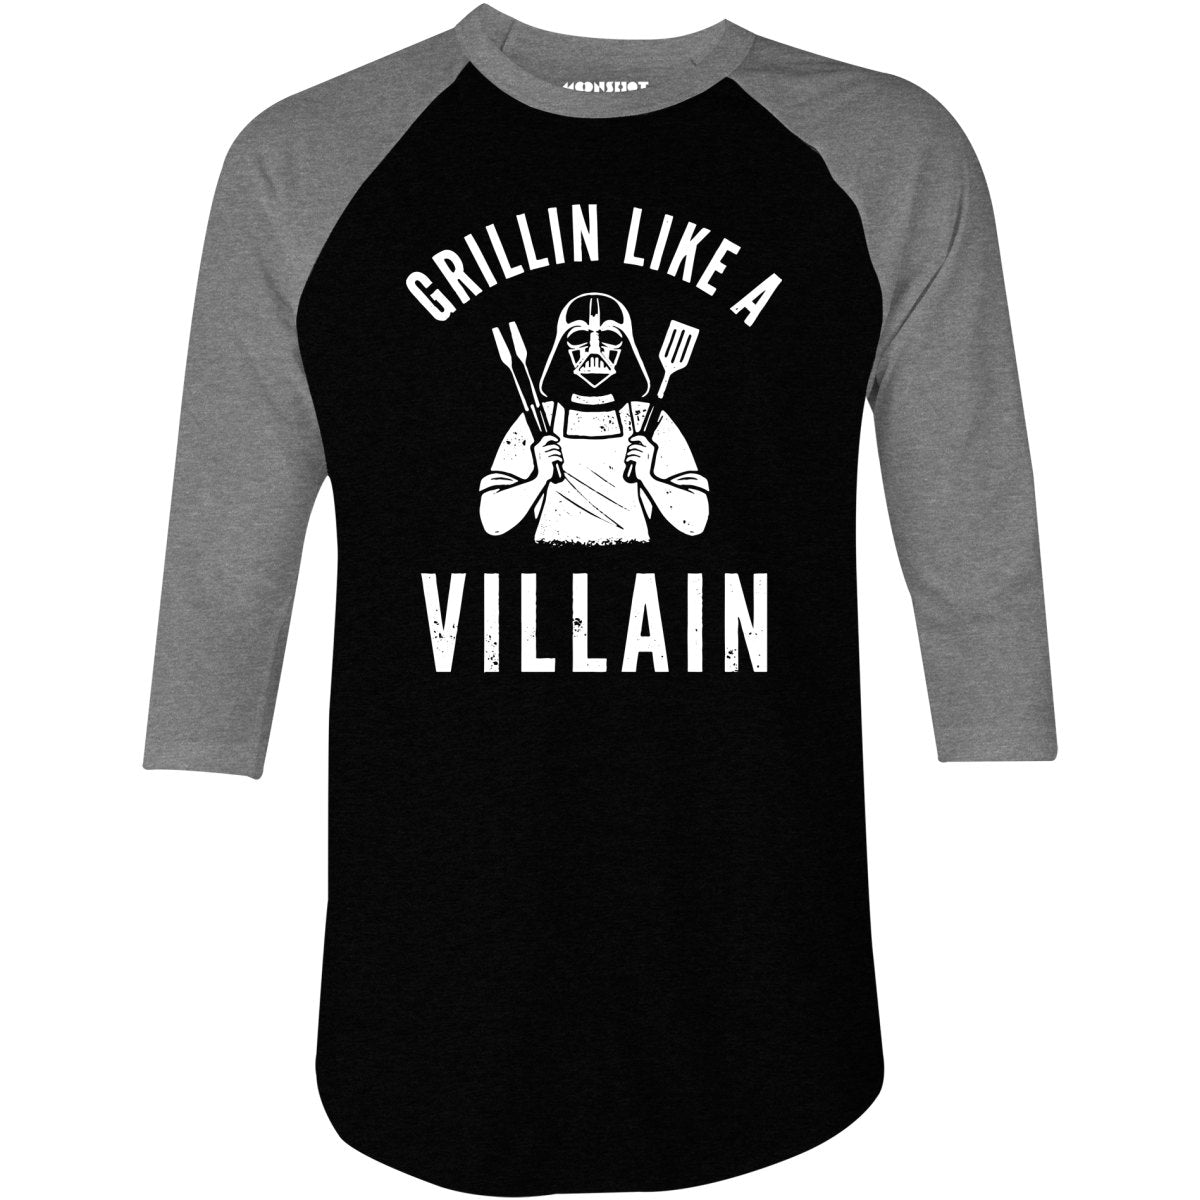 Grillin Like a Villain - 3/4 Sleeve Raglan T-Shirt